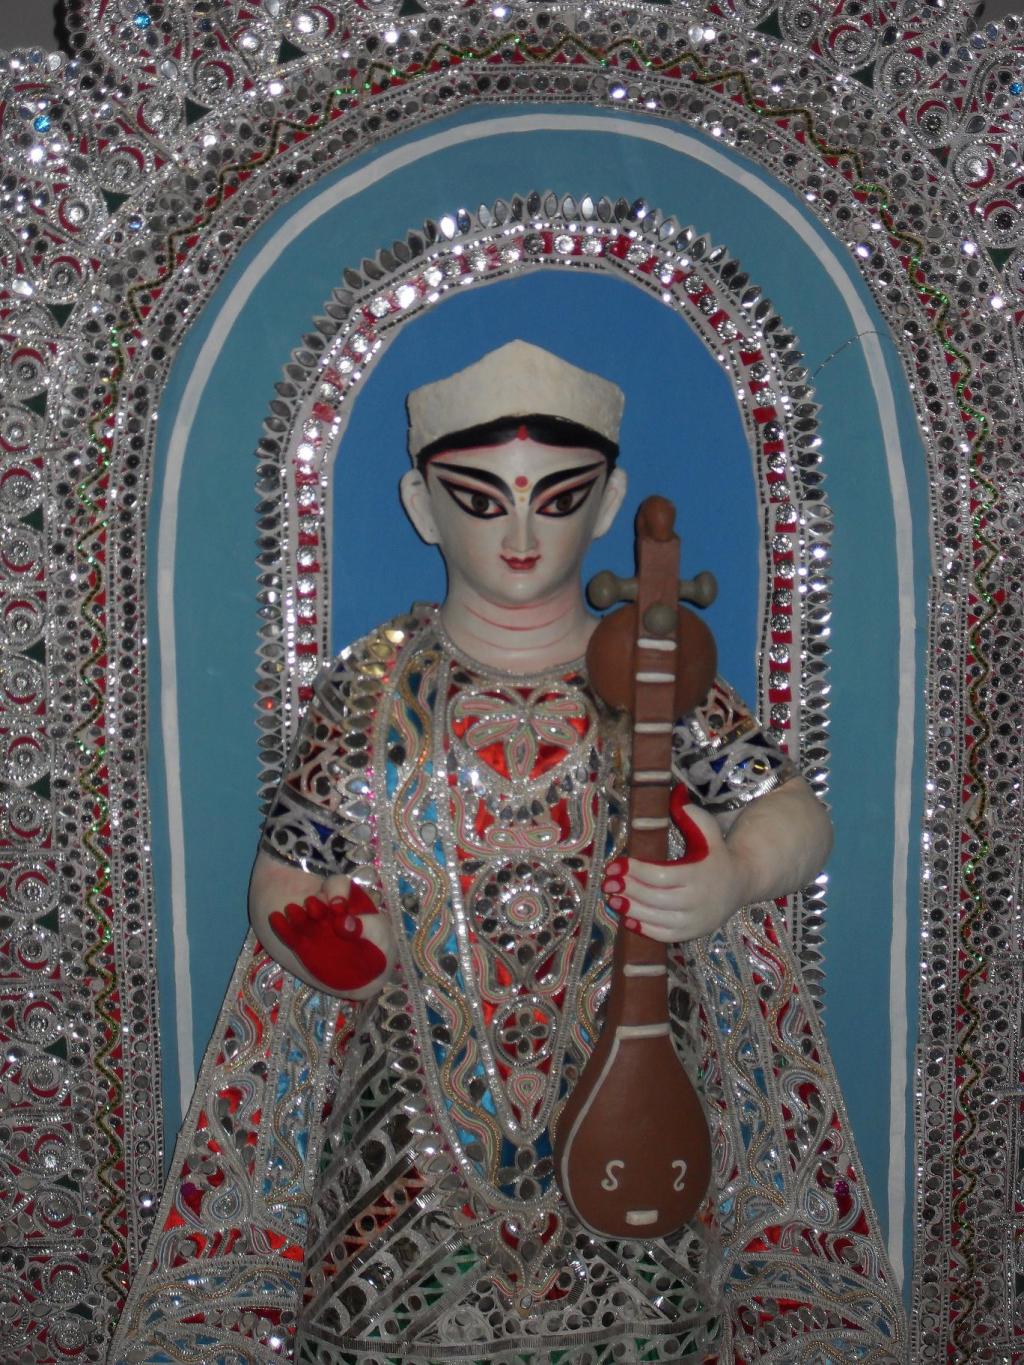 Sarasvati, Goddess of Knowledge and the Arts, holding her instrument, the veena.